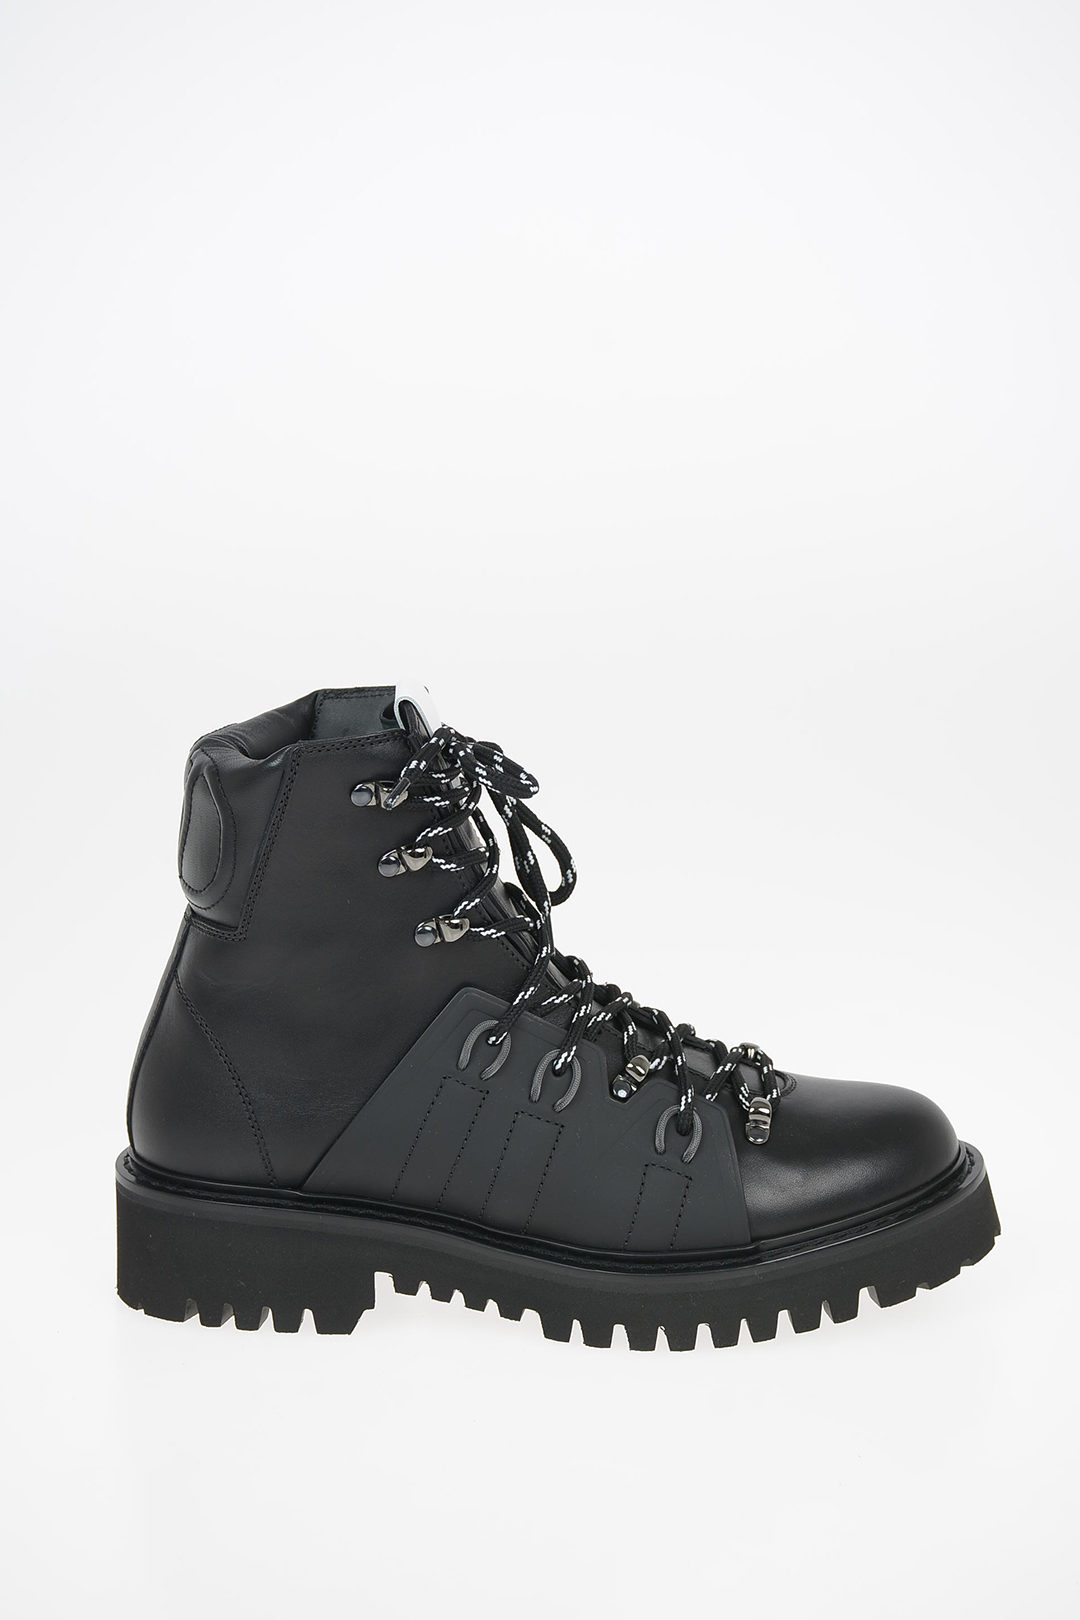 Valentino GARAVANI leather Hiking boots men - Glamood Outlet